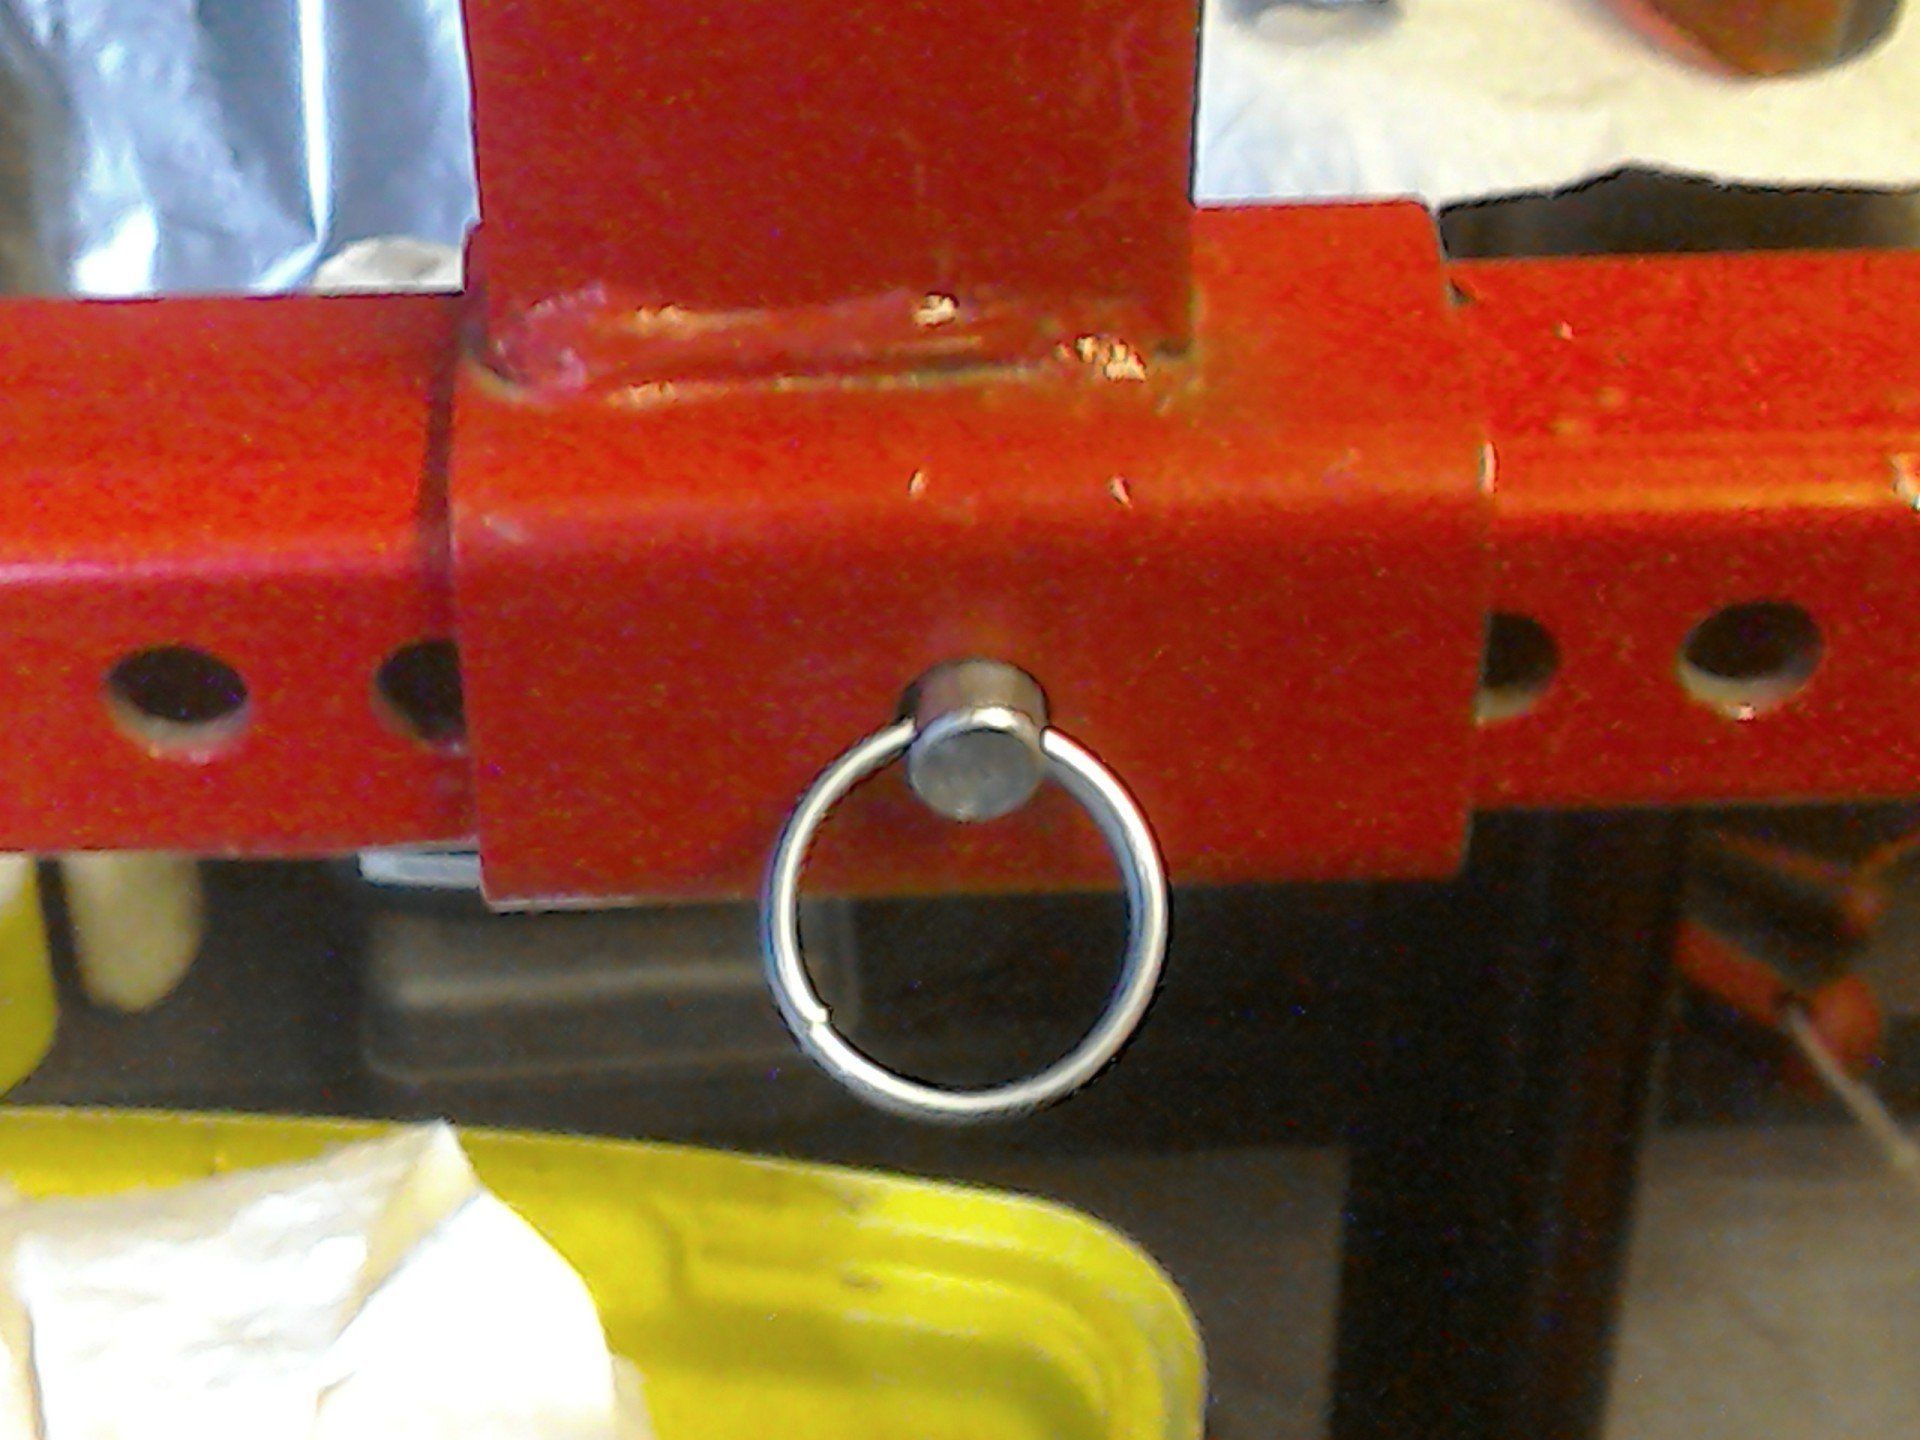 Standard Sealey wheel clamp adjustment